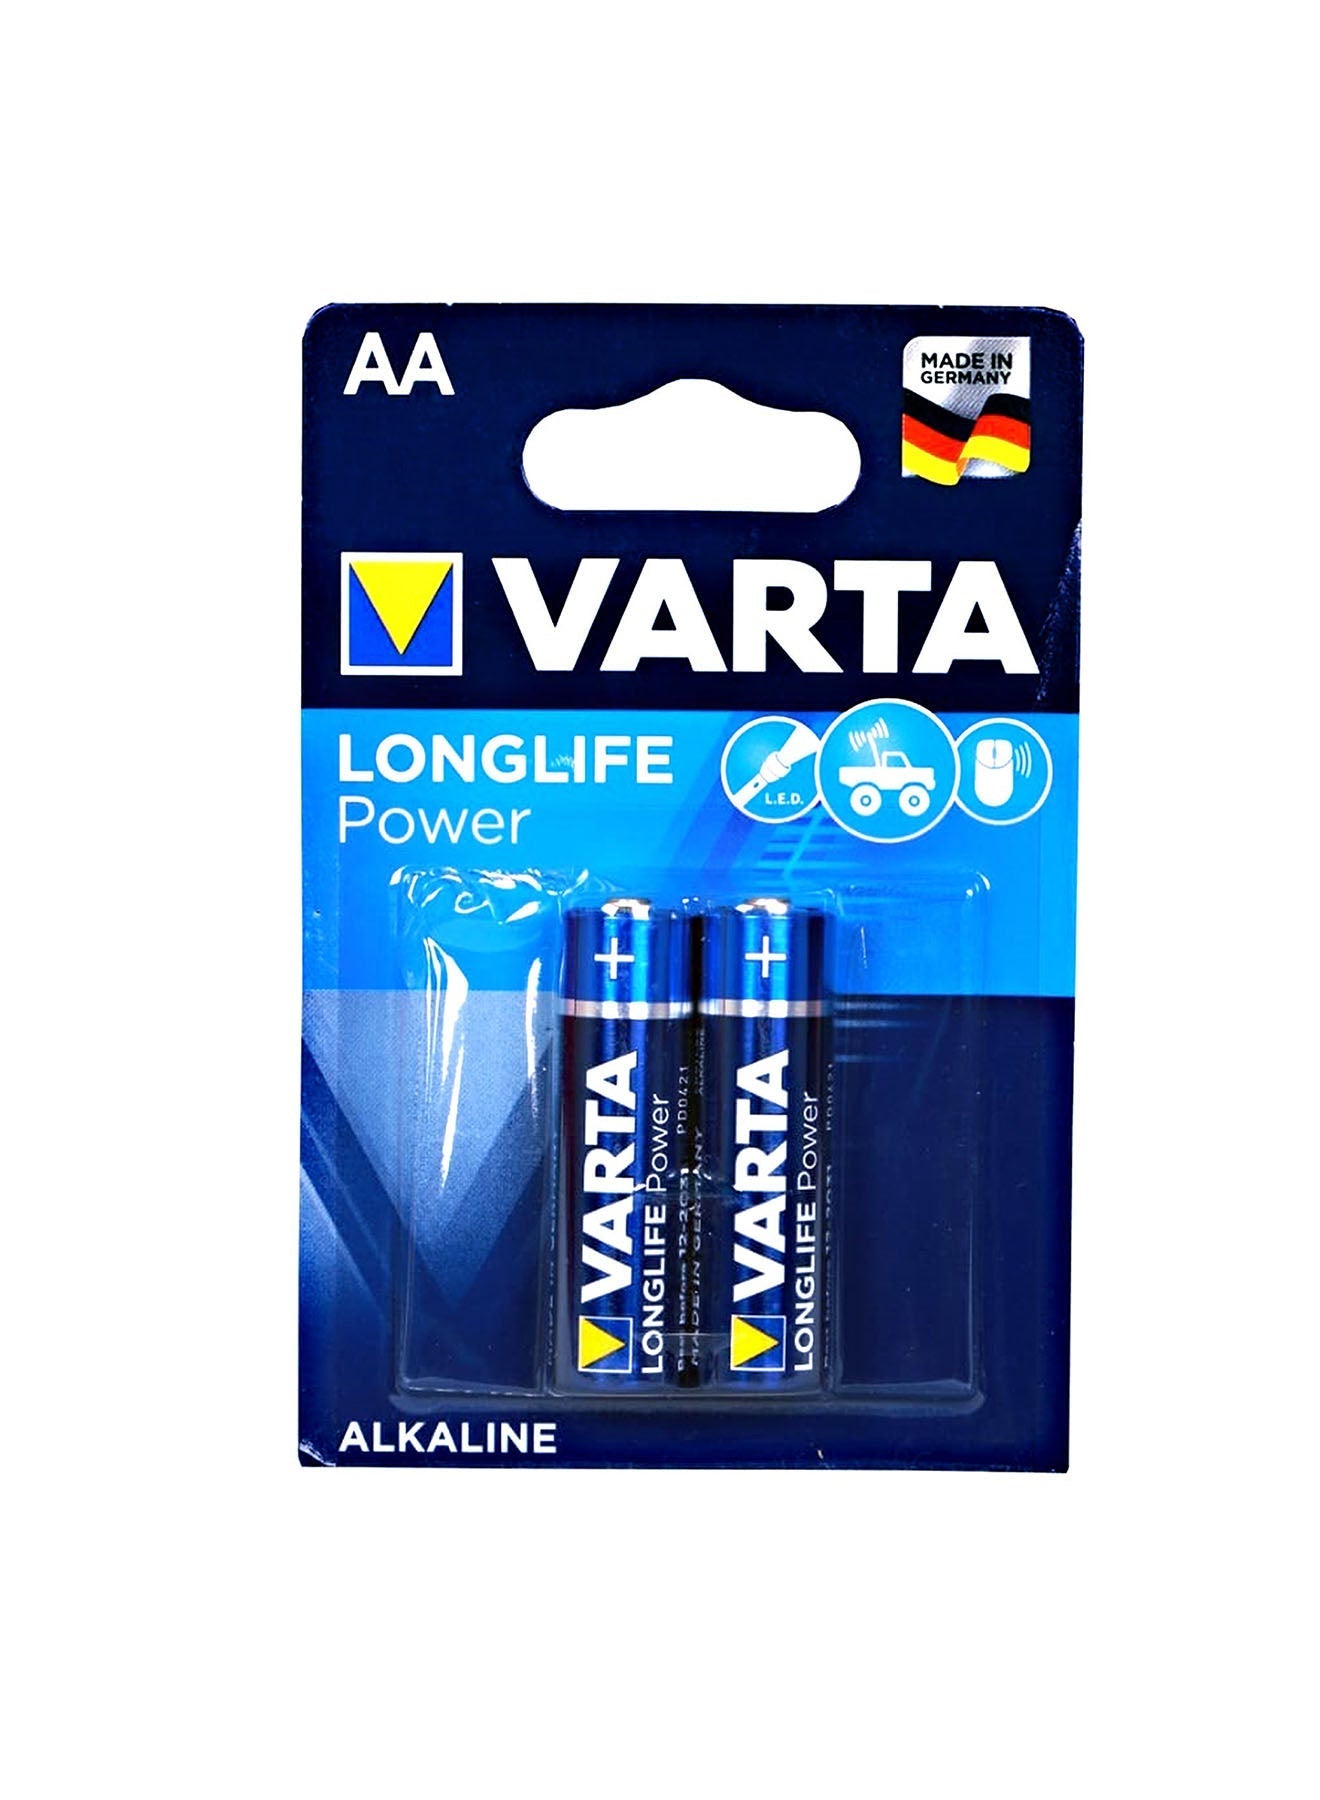 Varta Long Life Power AA Alkaline 2 units